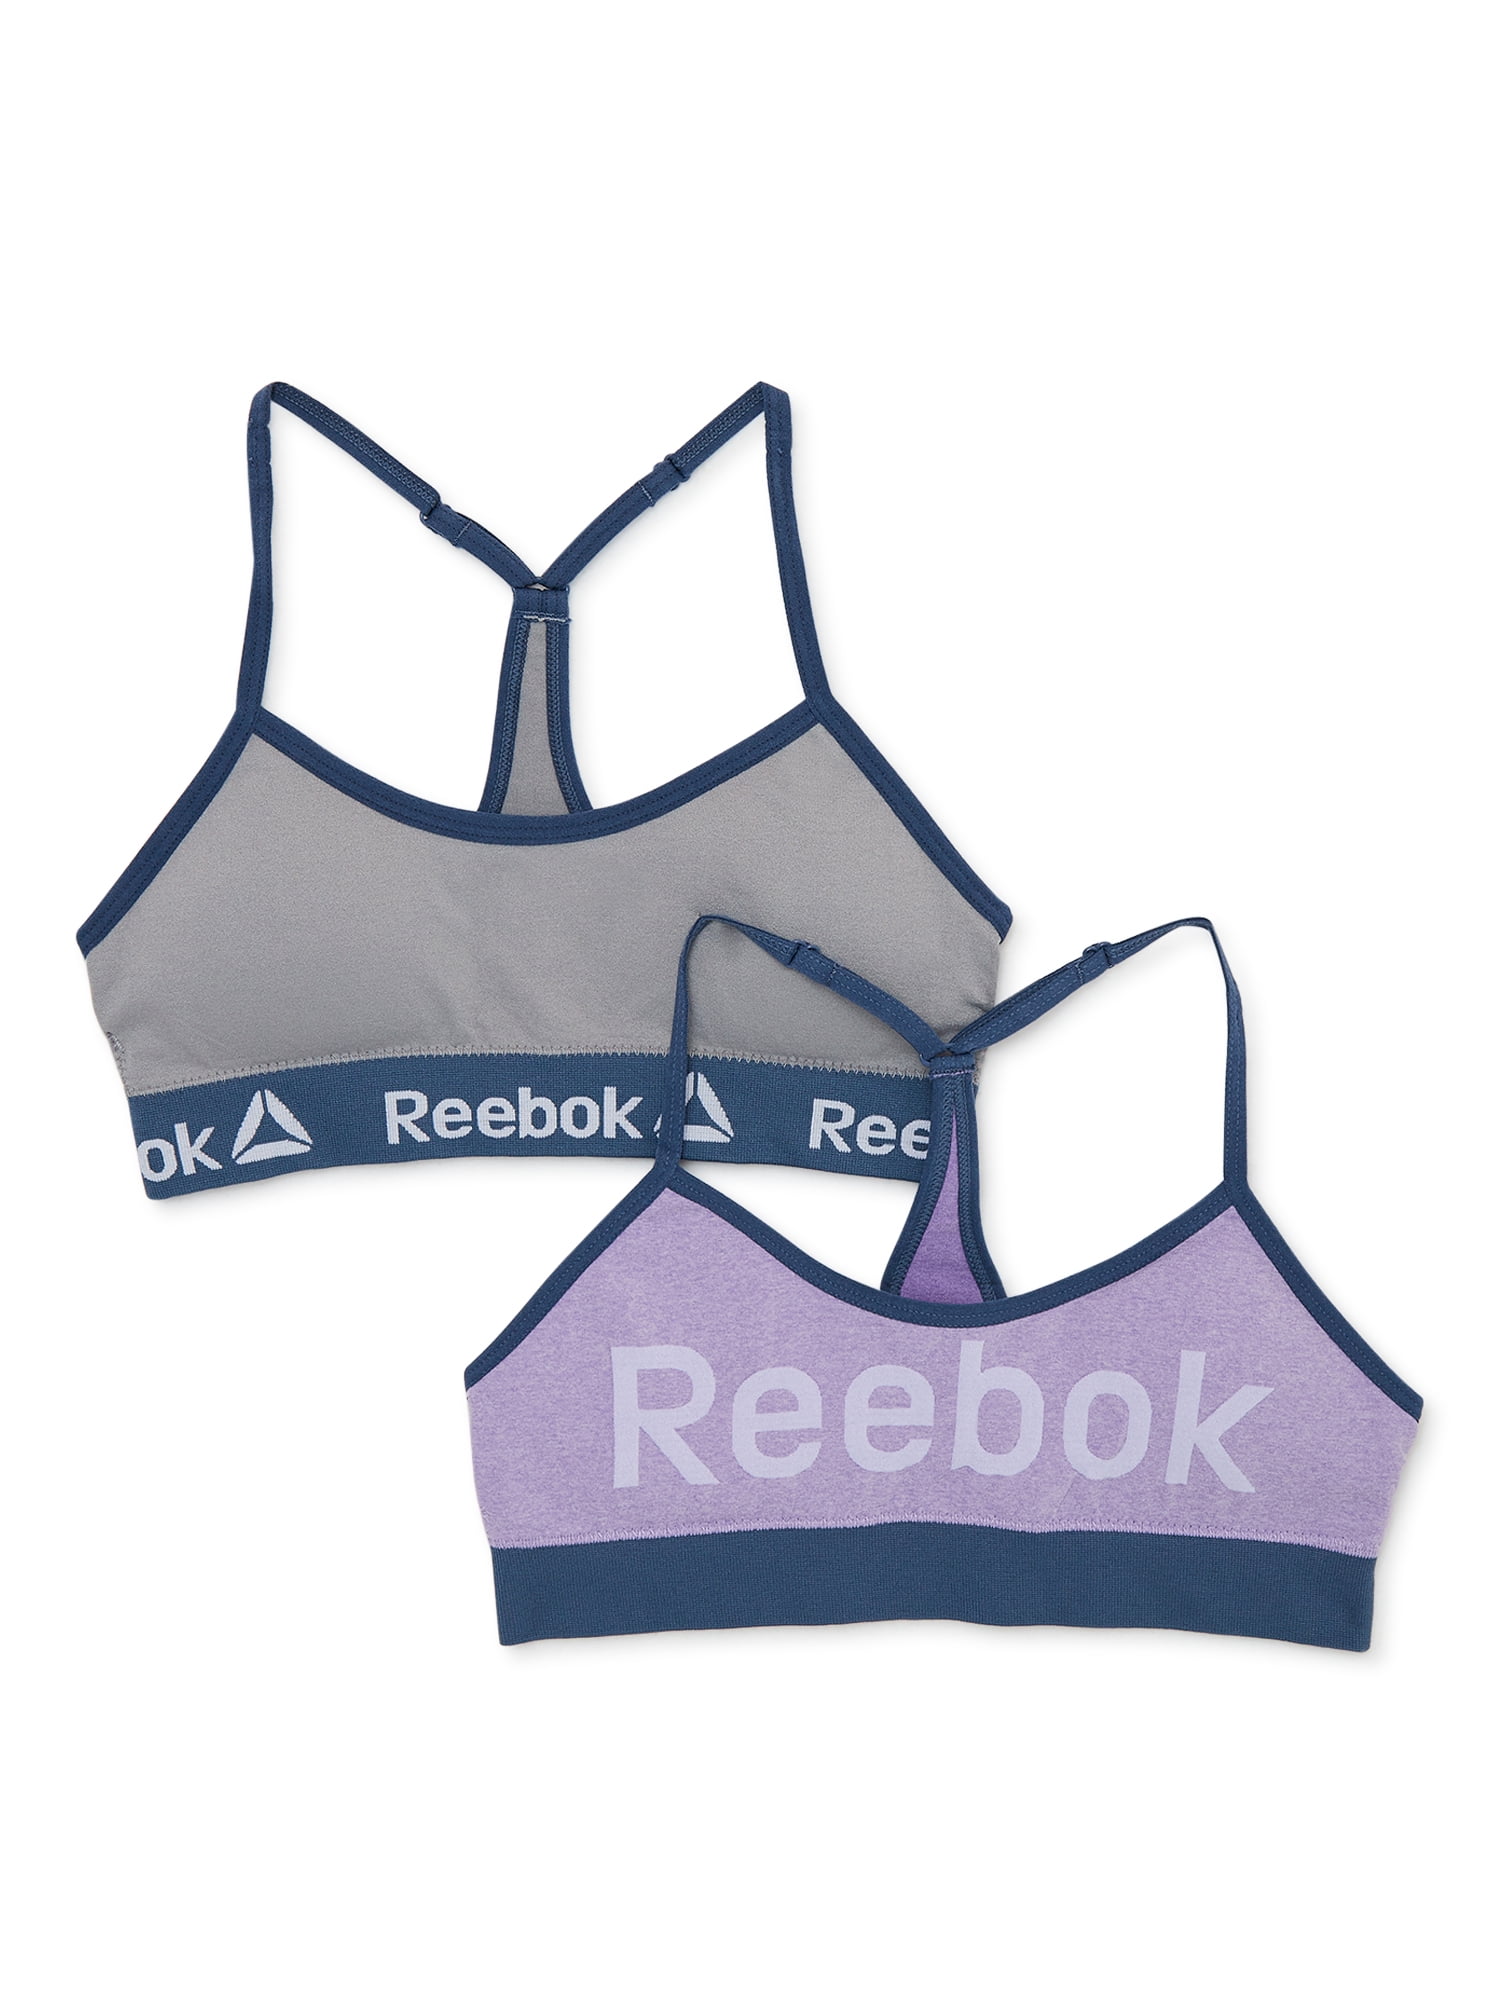 Reebok Girls Seamless Bras T-Back Bralettes, 2-Pack 